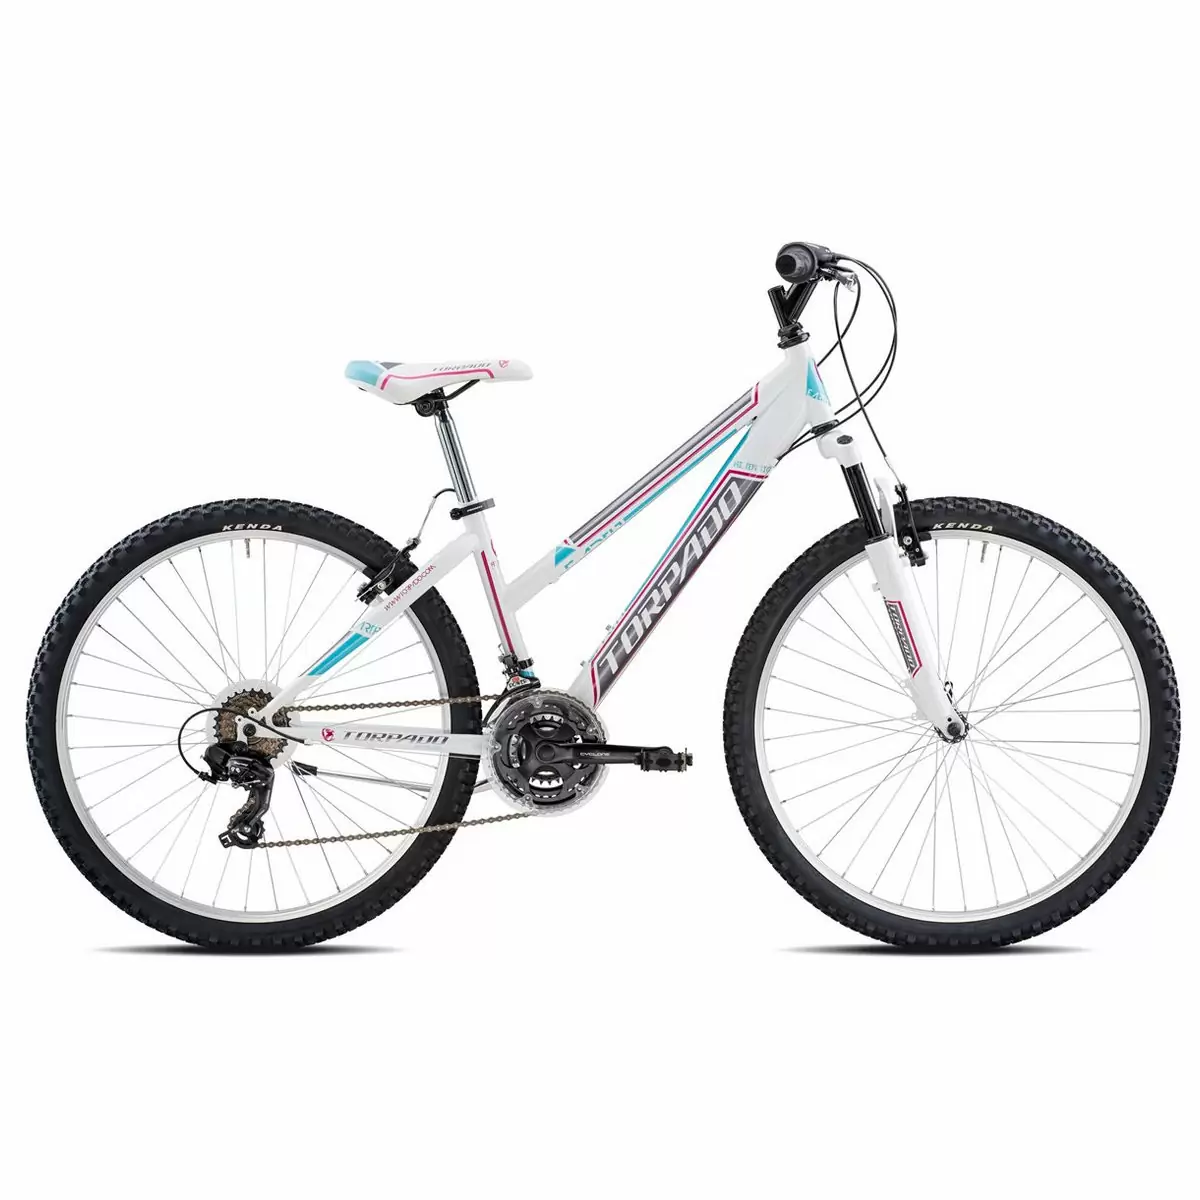 Bicicleta mtb mujer T596 Earth 26'' 3x7v talla 38 blanco azul claro - image